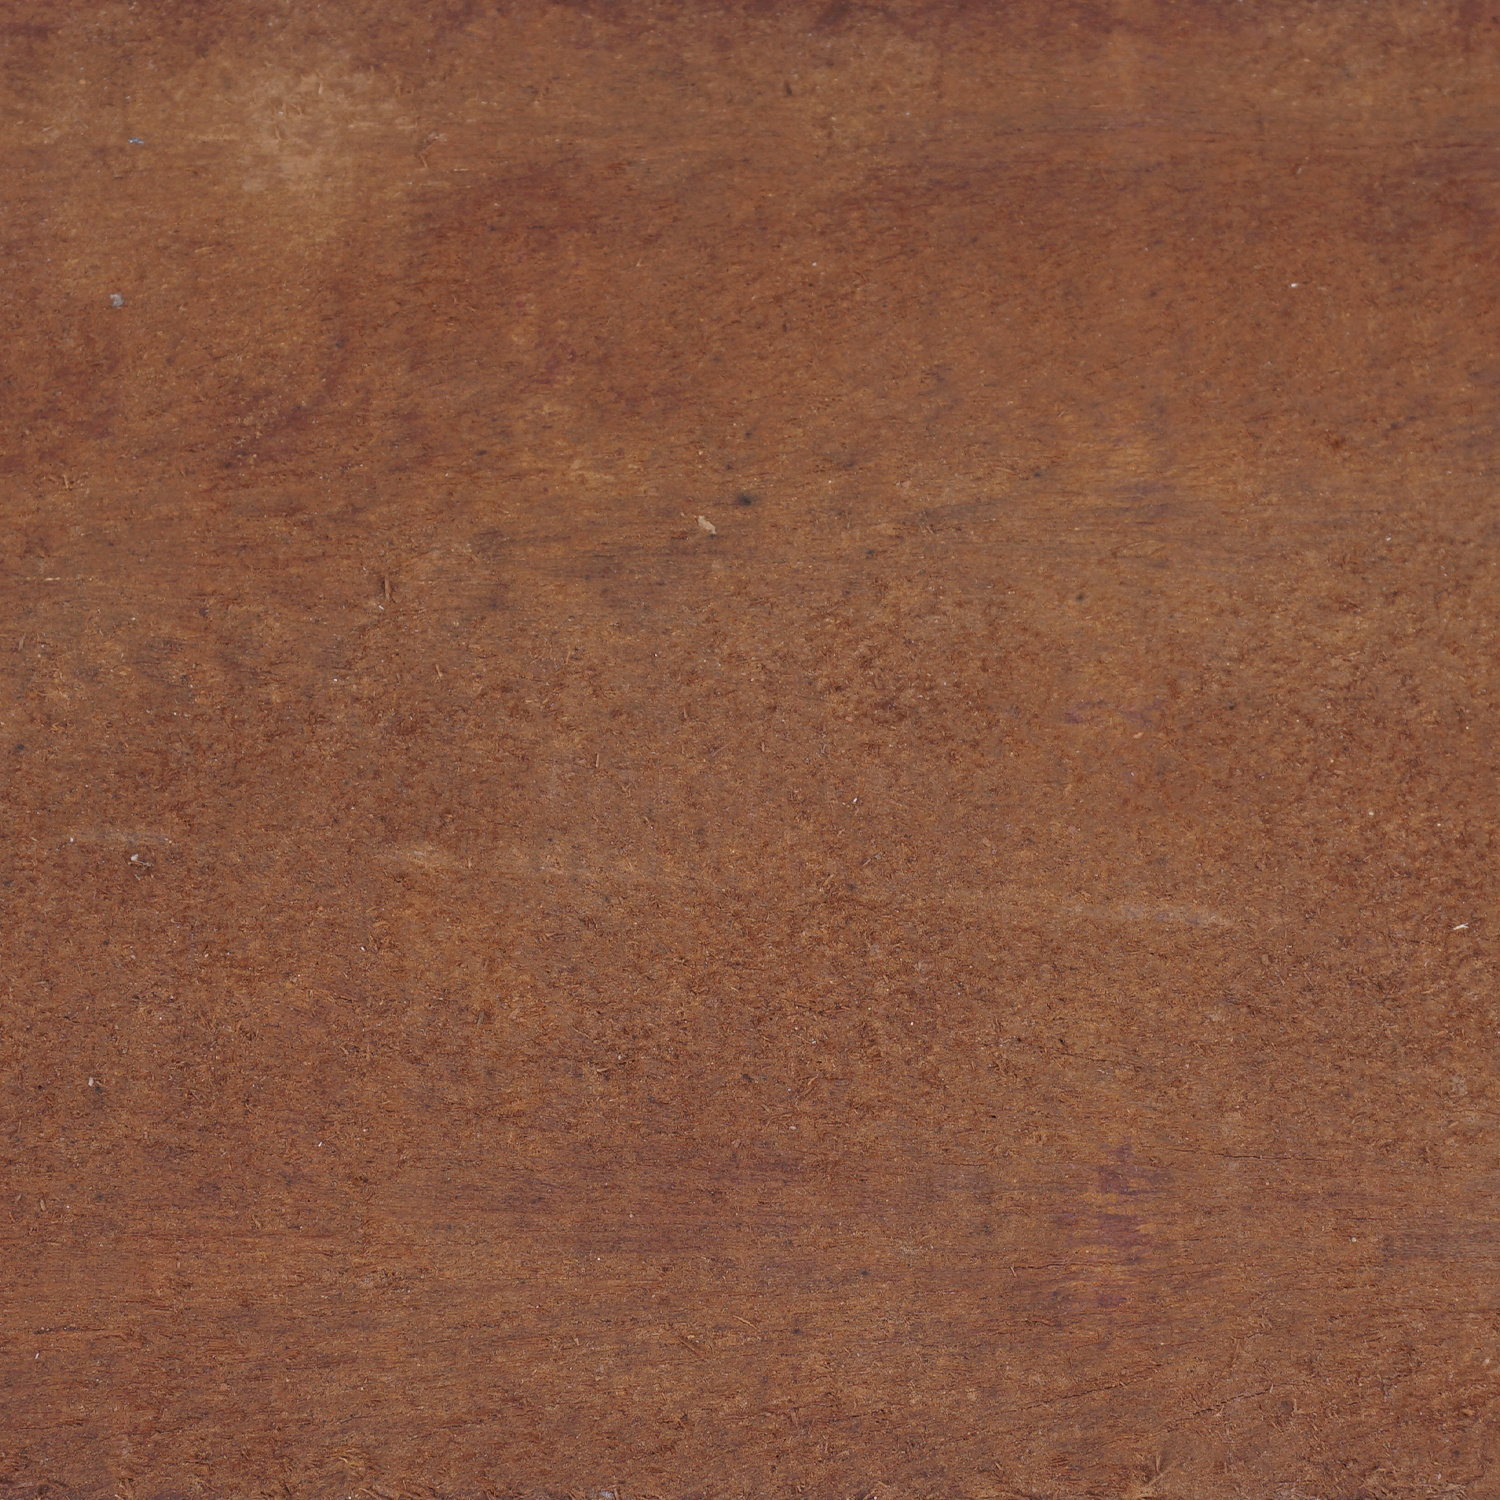  Azobe balk 150x150 mm - ruw (fijnbezaagd) - tropisch hardhout AD (aangedroogd)